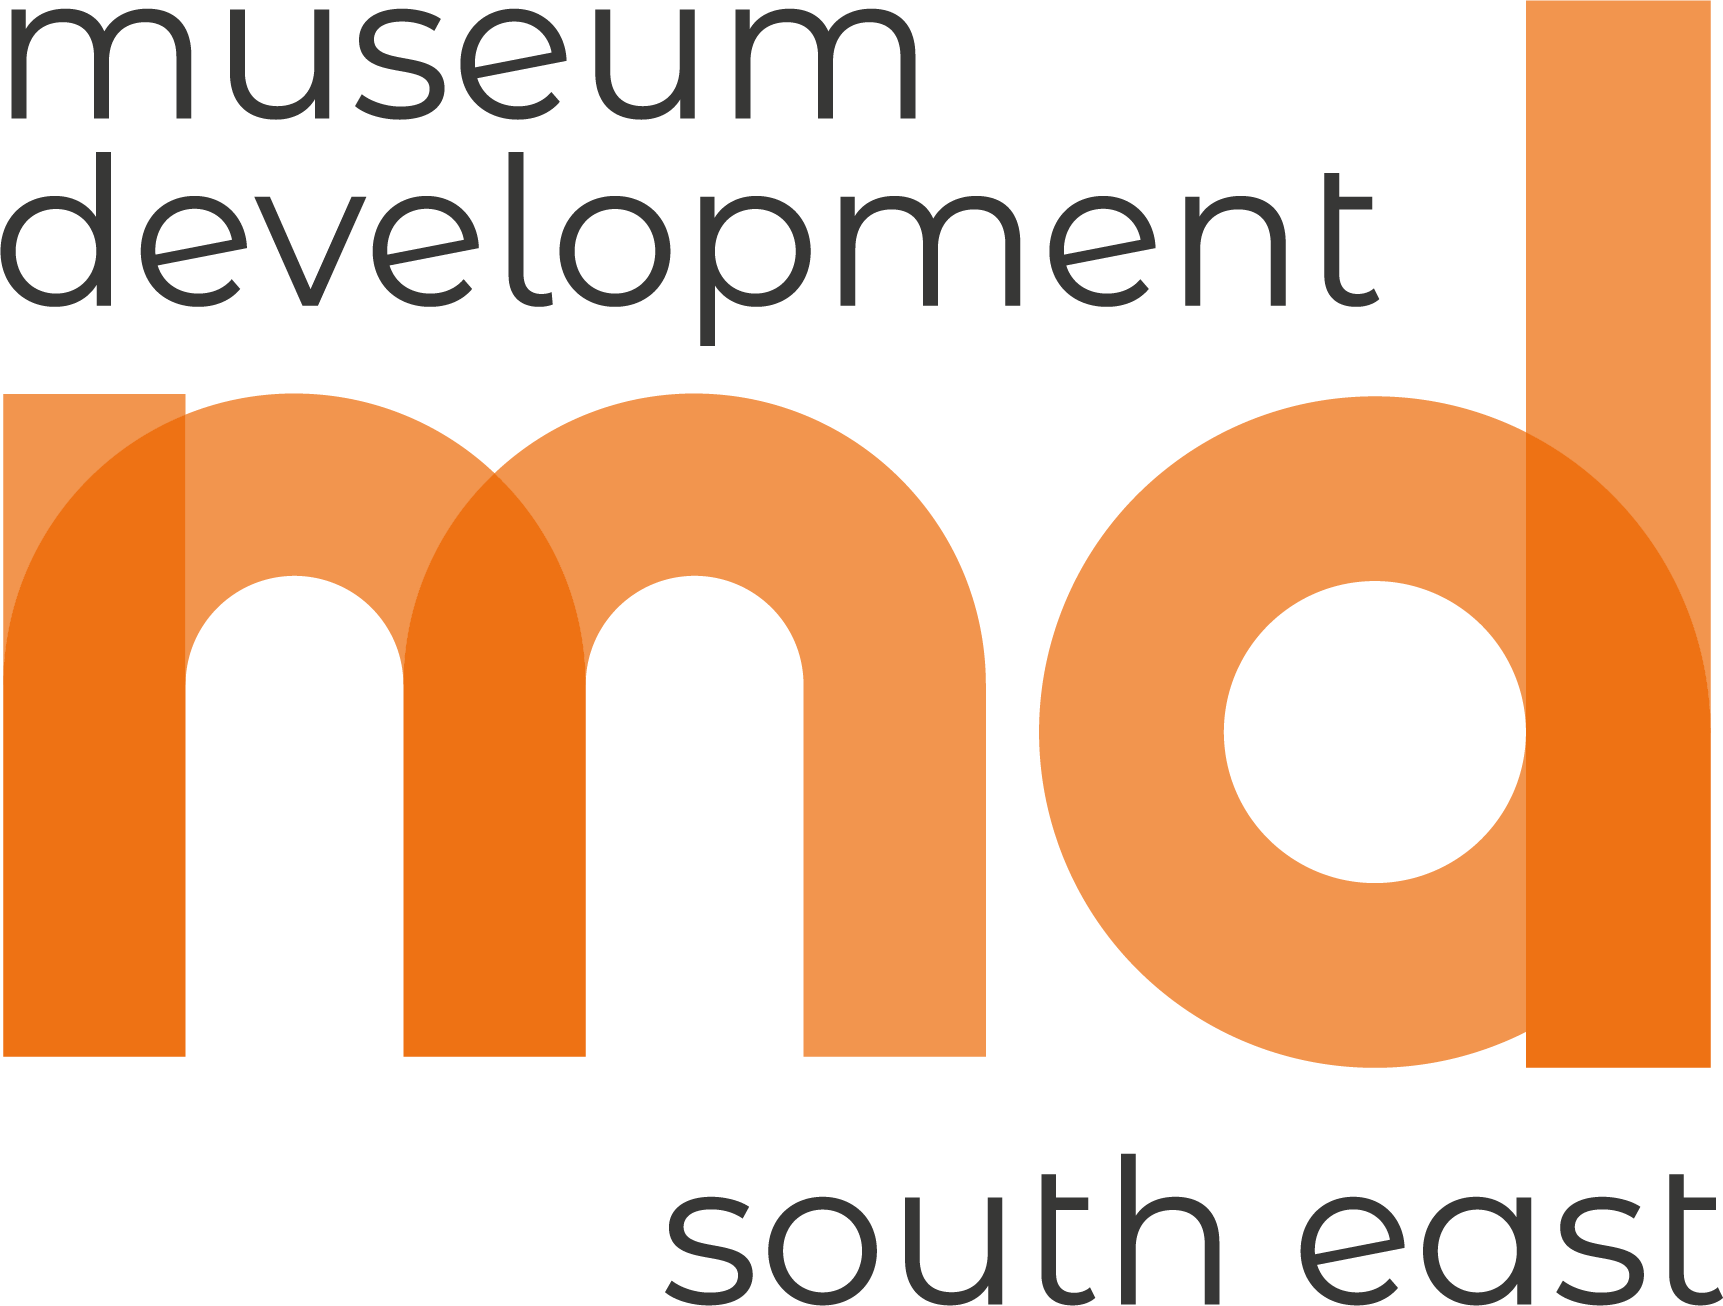 South East Museum Development logo.